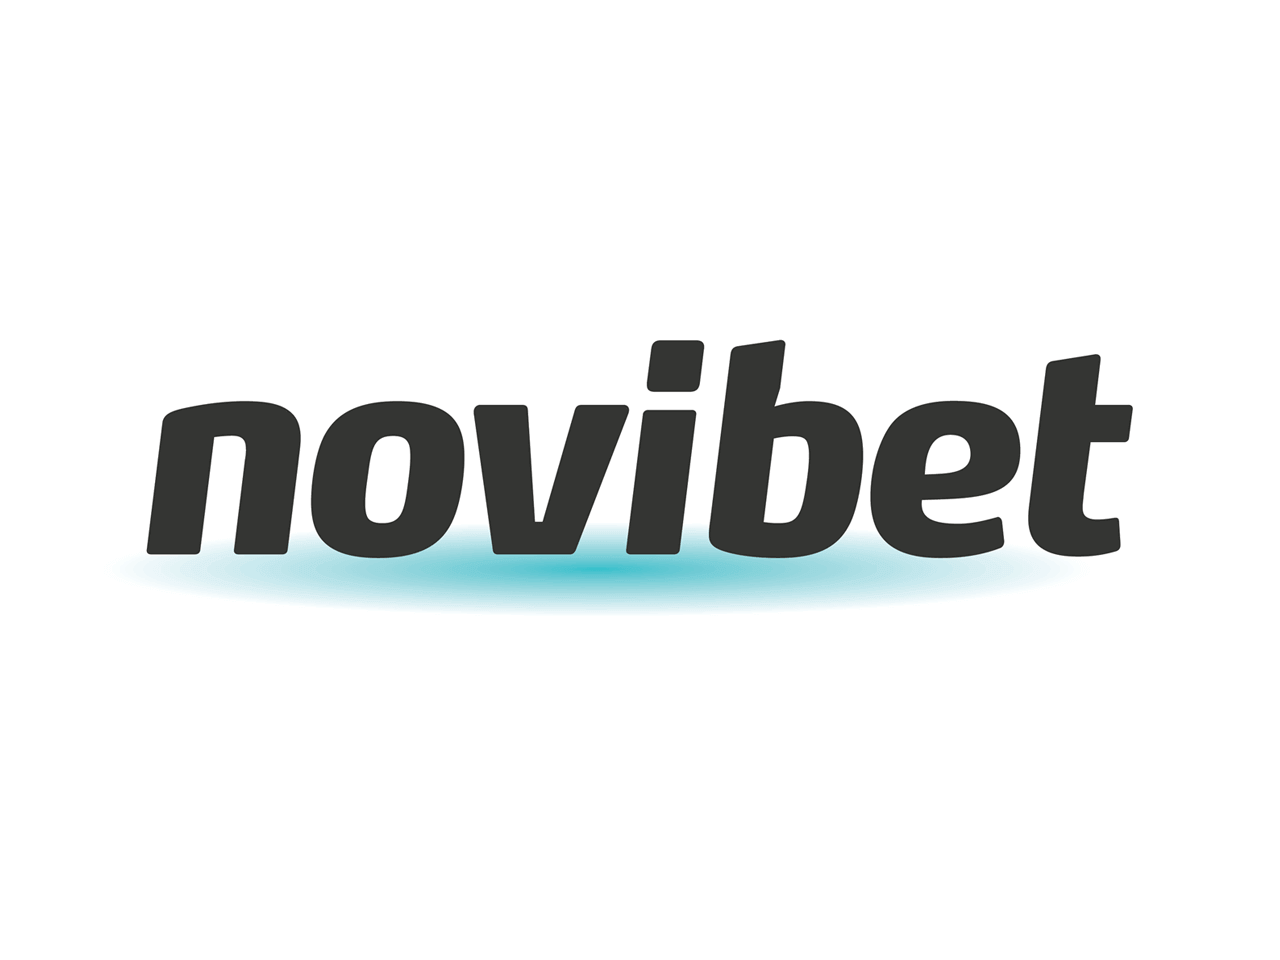 novibet investor relations